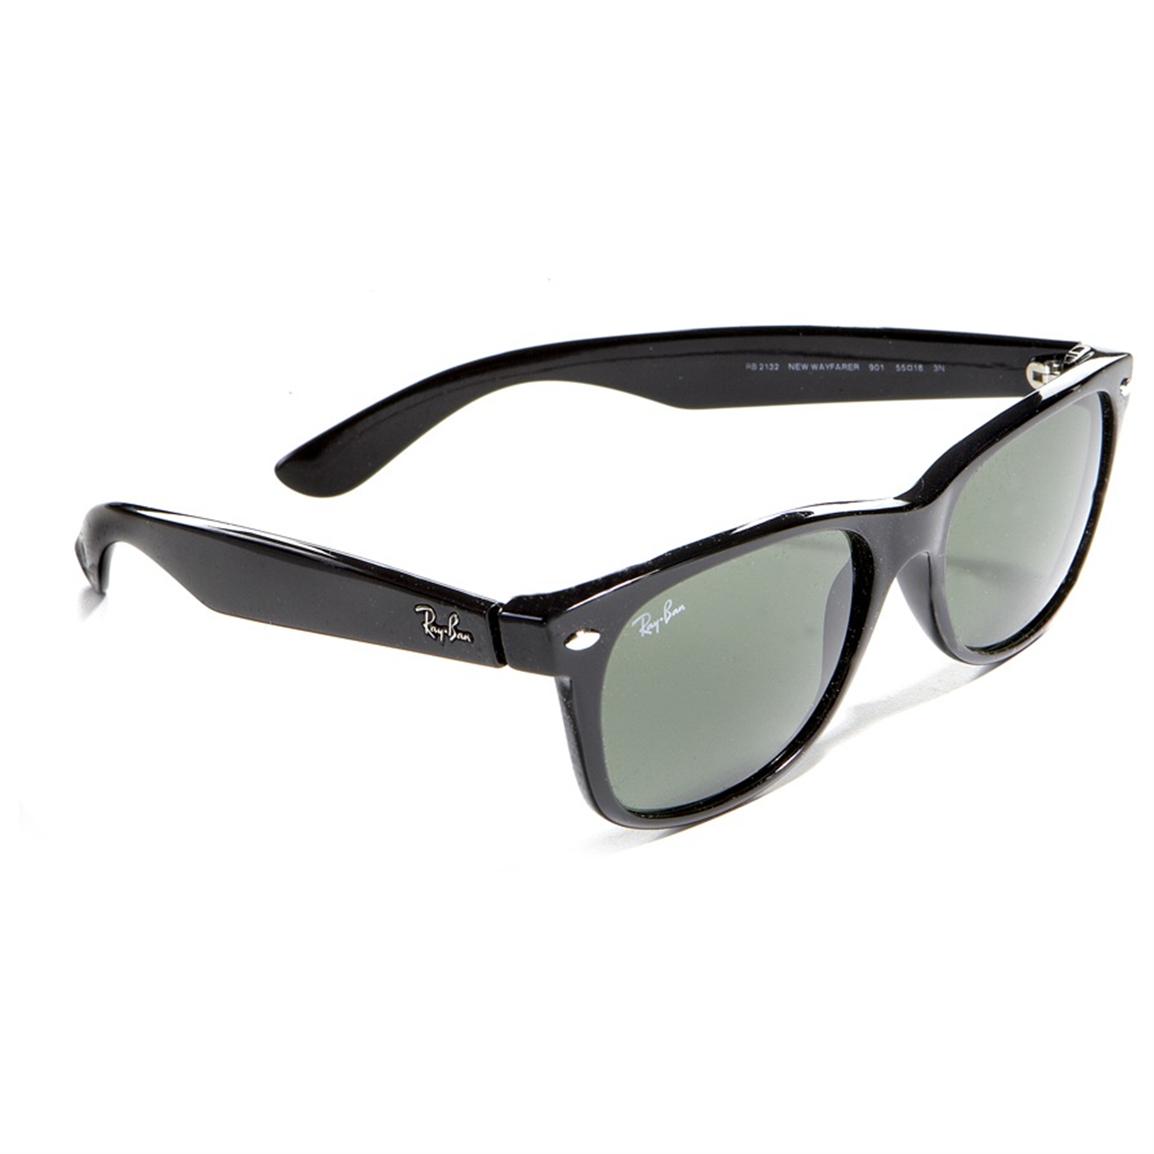 Ray - Ban® Wayfarer Sunglasses, Black Frames - 201695, Sunglasses ...